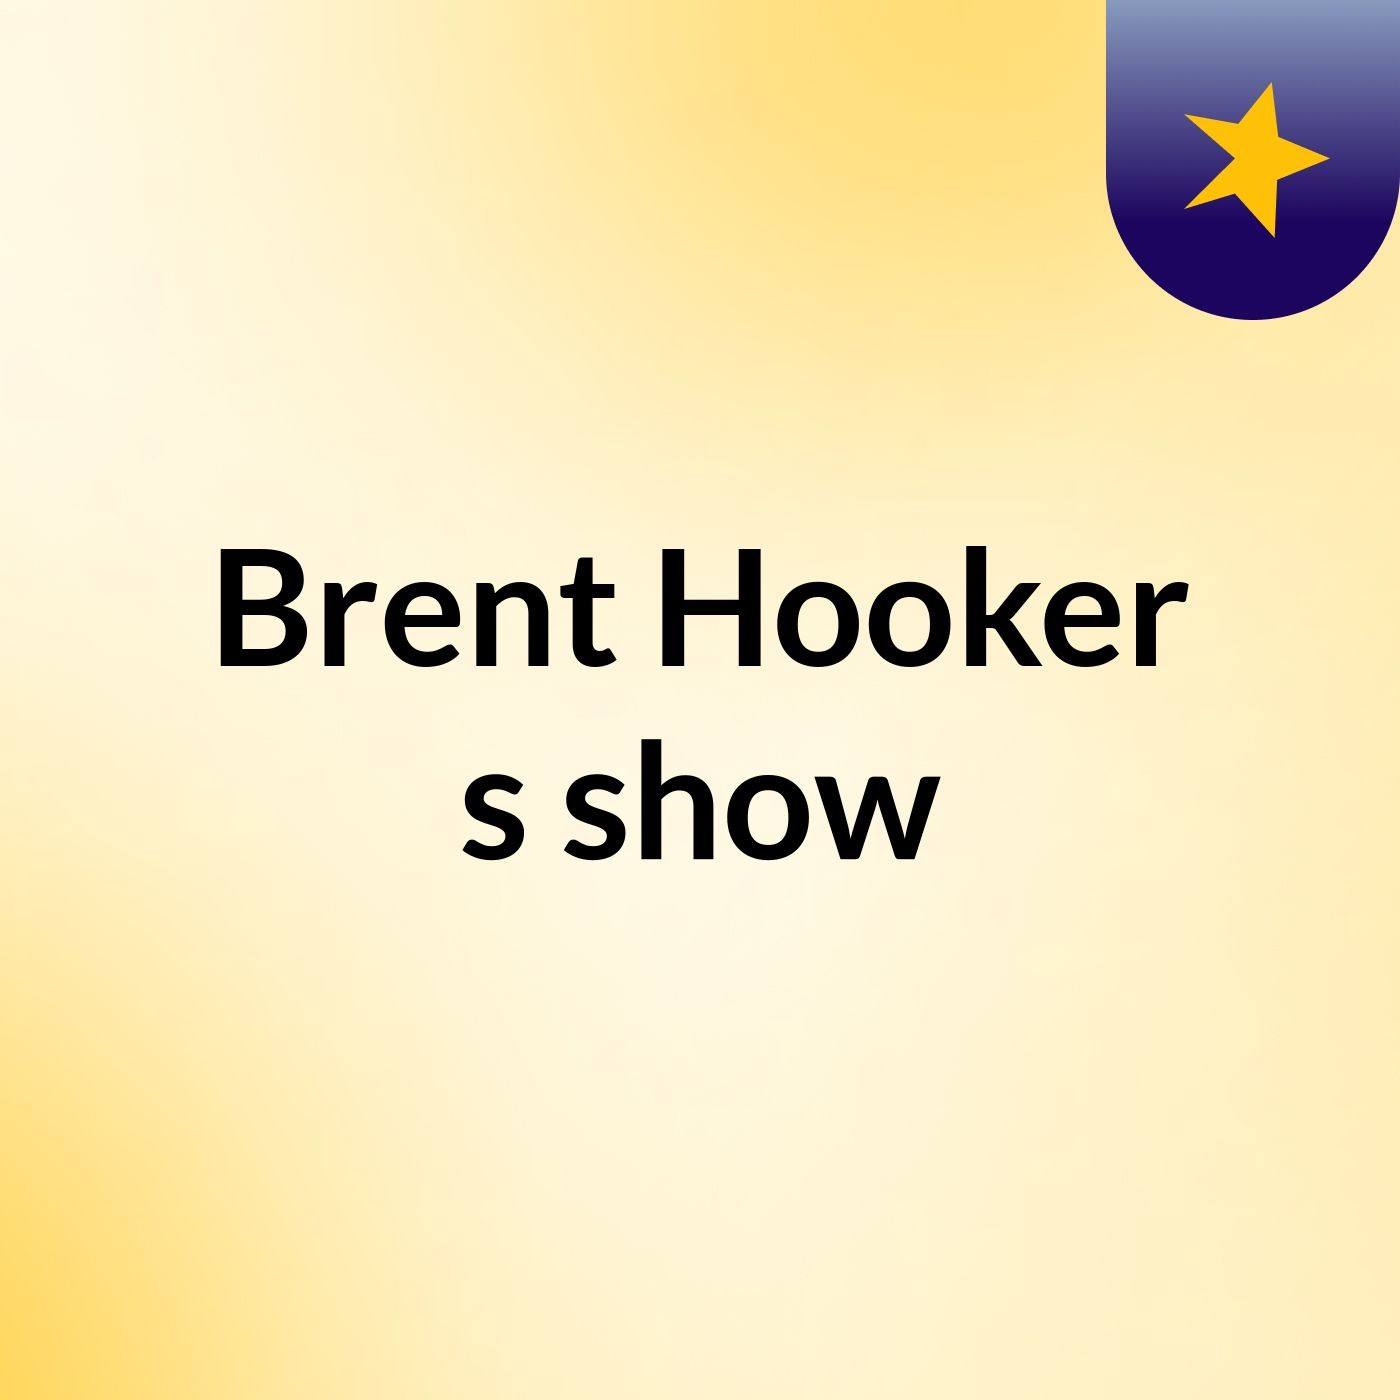 Episode 3 - Brent Hooker's show